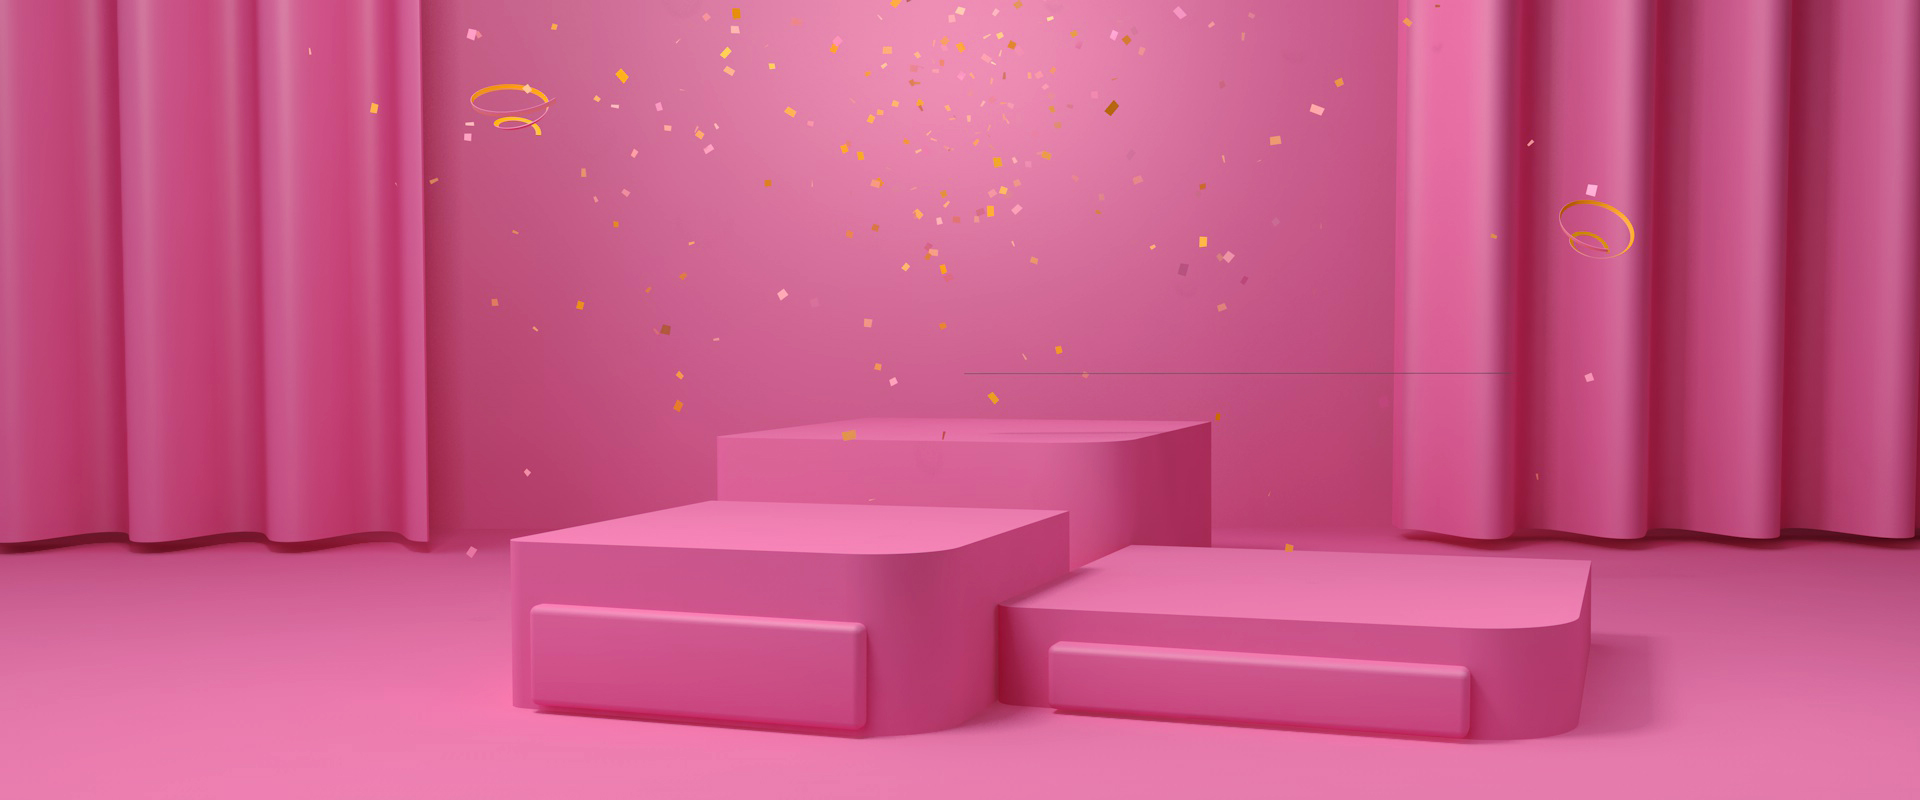 C4D模型促销活动粉色空间展台素材C4D模型促销活动粉色空间展台素材.jpg